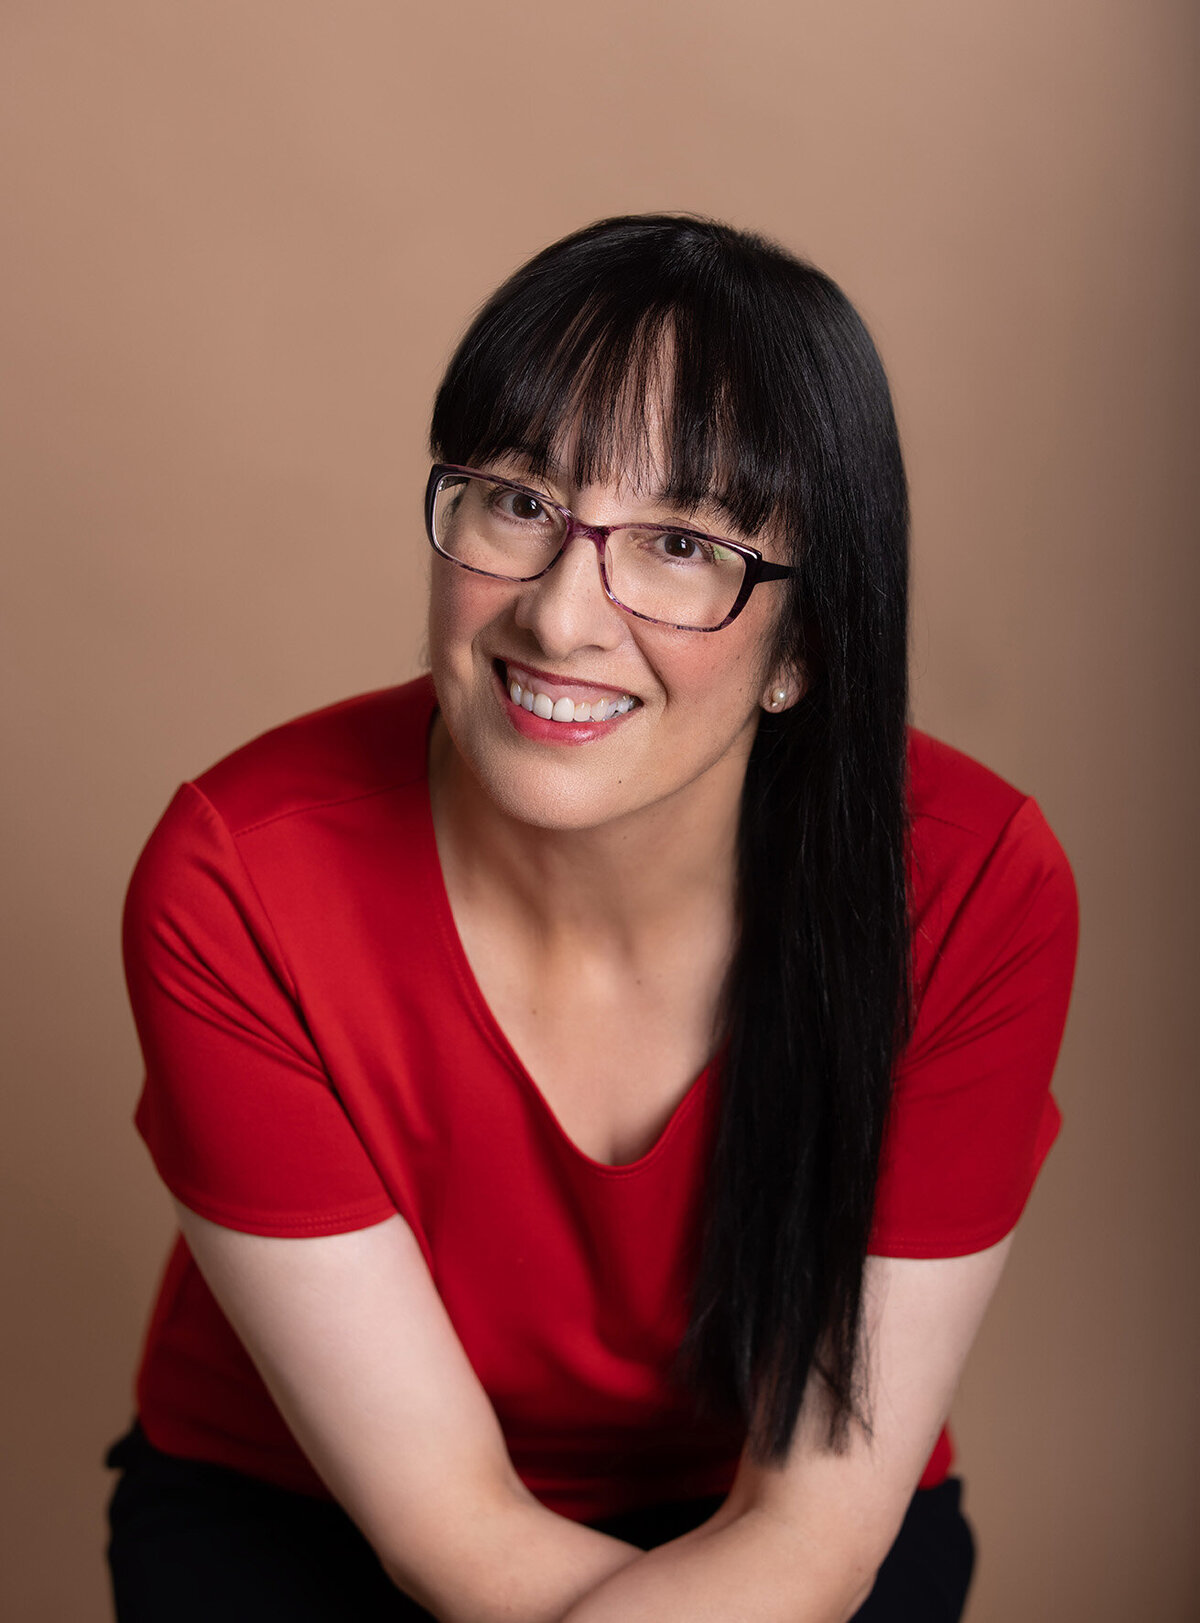 Author Angela Greenman studio headshot on tan backdrop red shirt.